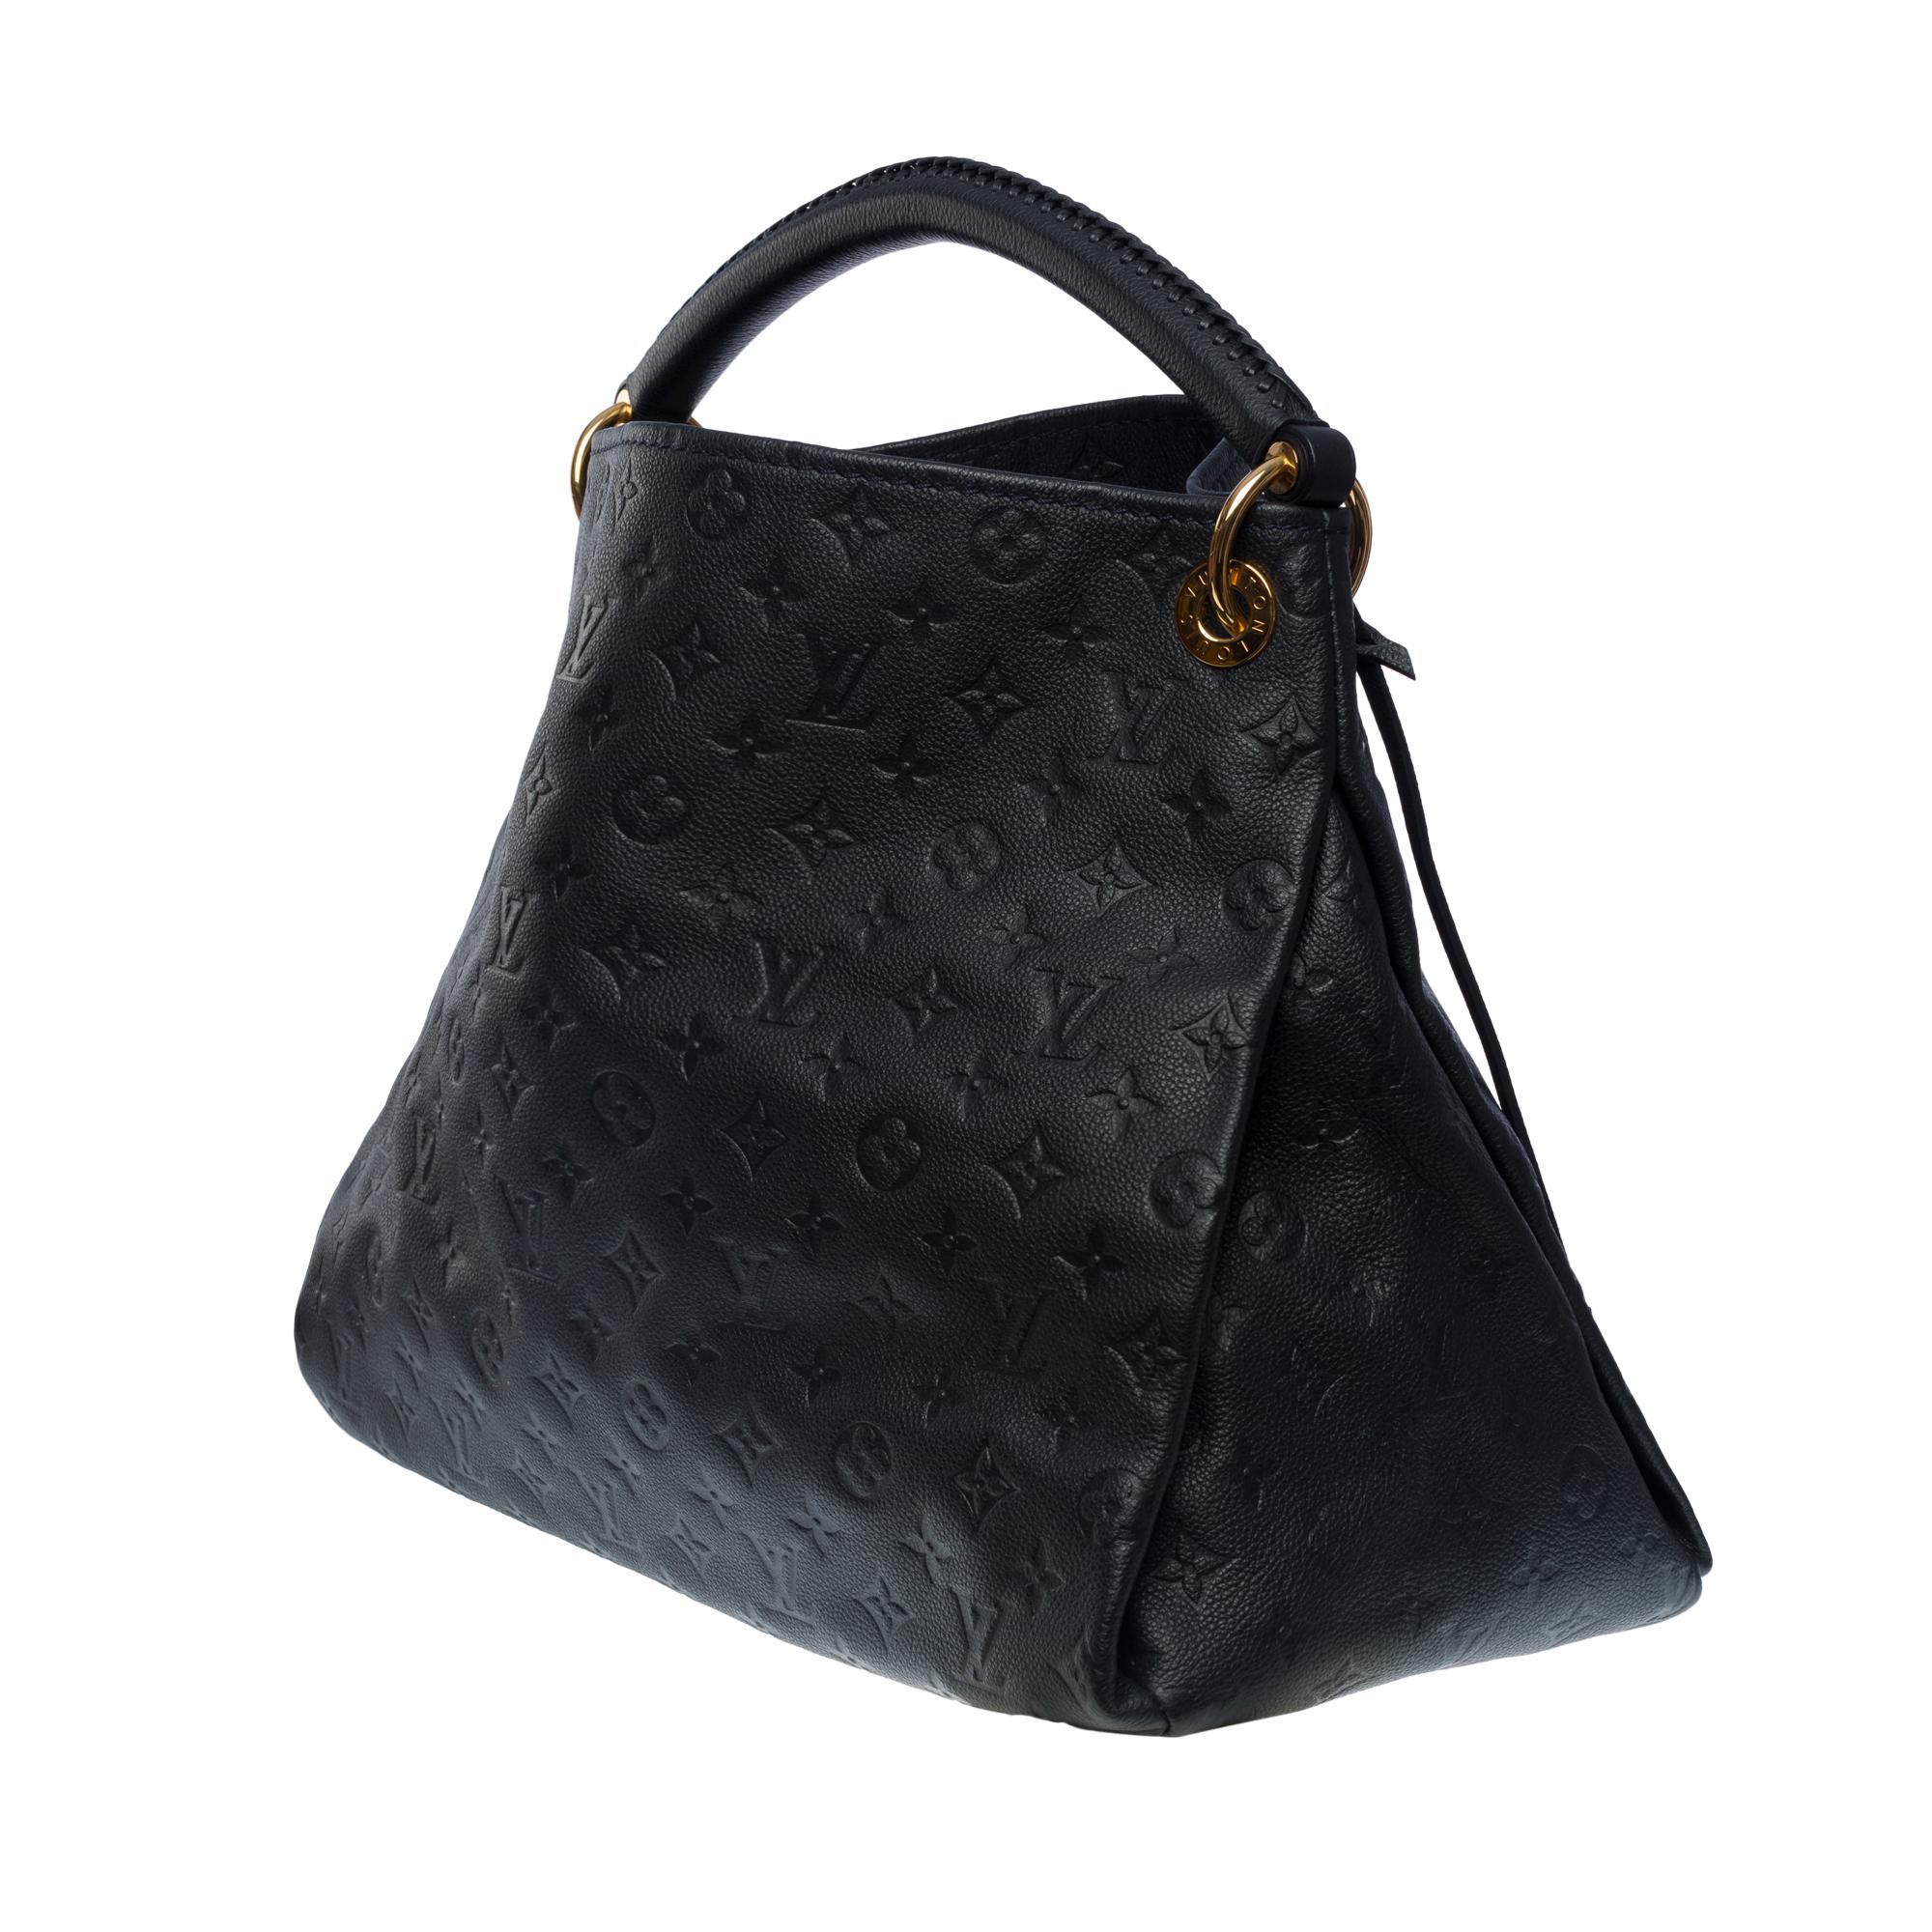 Women's Louis Vuitton Artsy MM Hobo bag in dark blue monogram calfskin leather, GHW For Sale